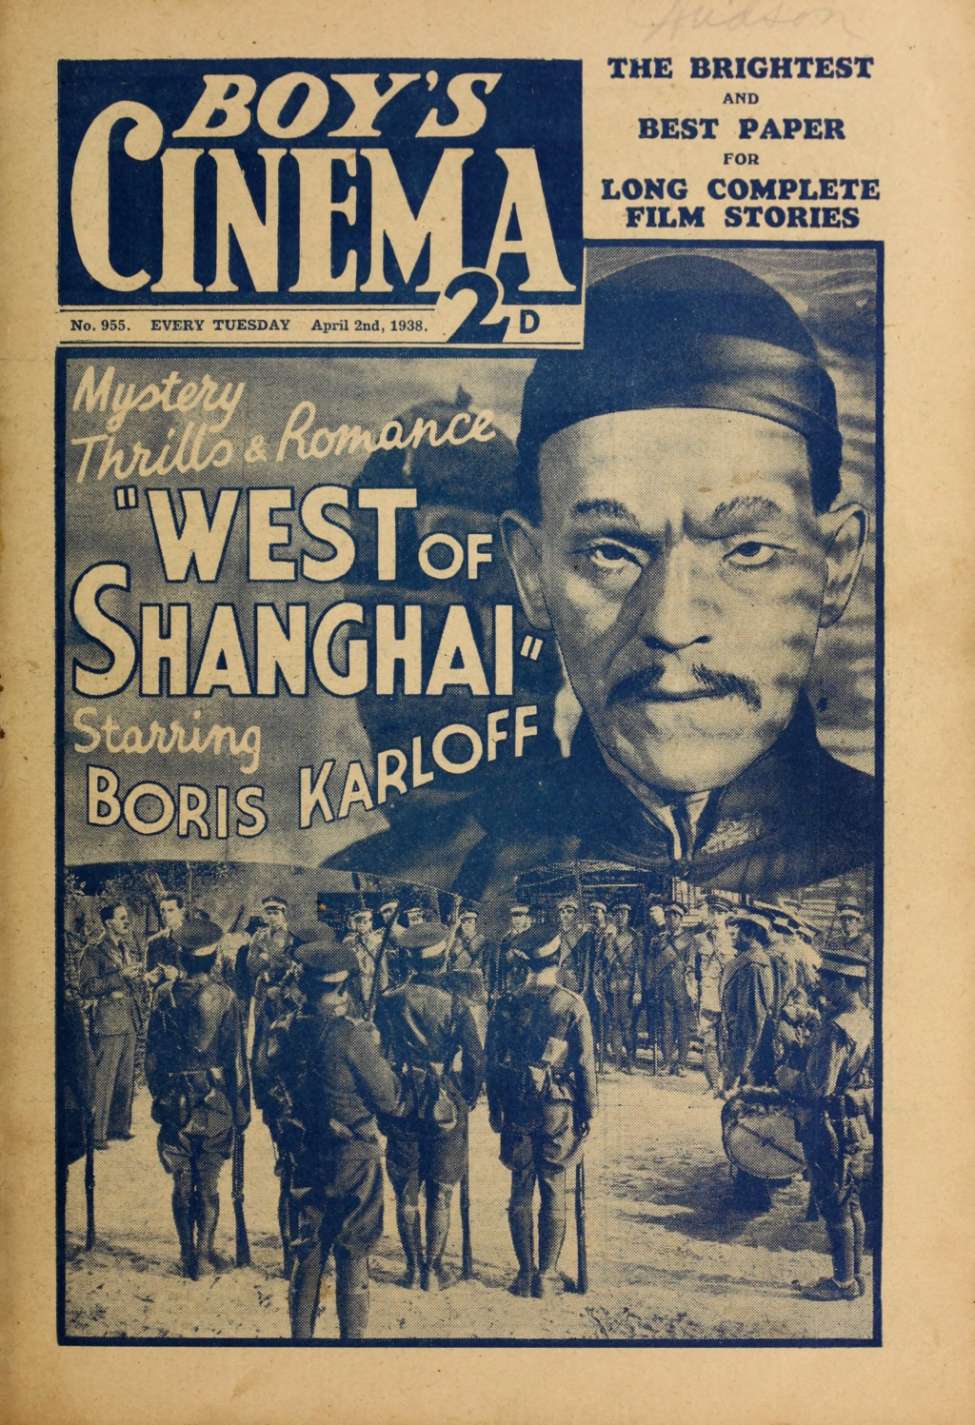 Comic Book Cover For Boy's Cinema 955 - West of Shanghai - Boris Karloff